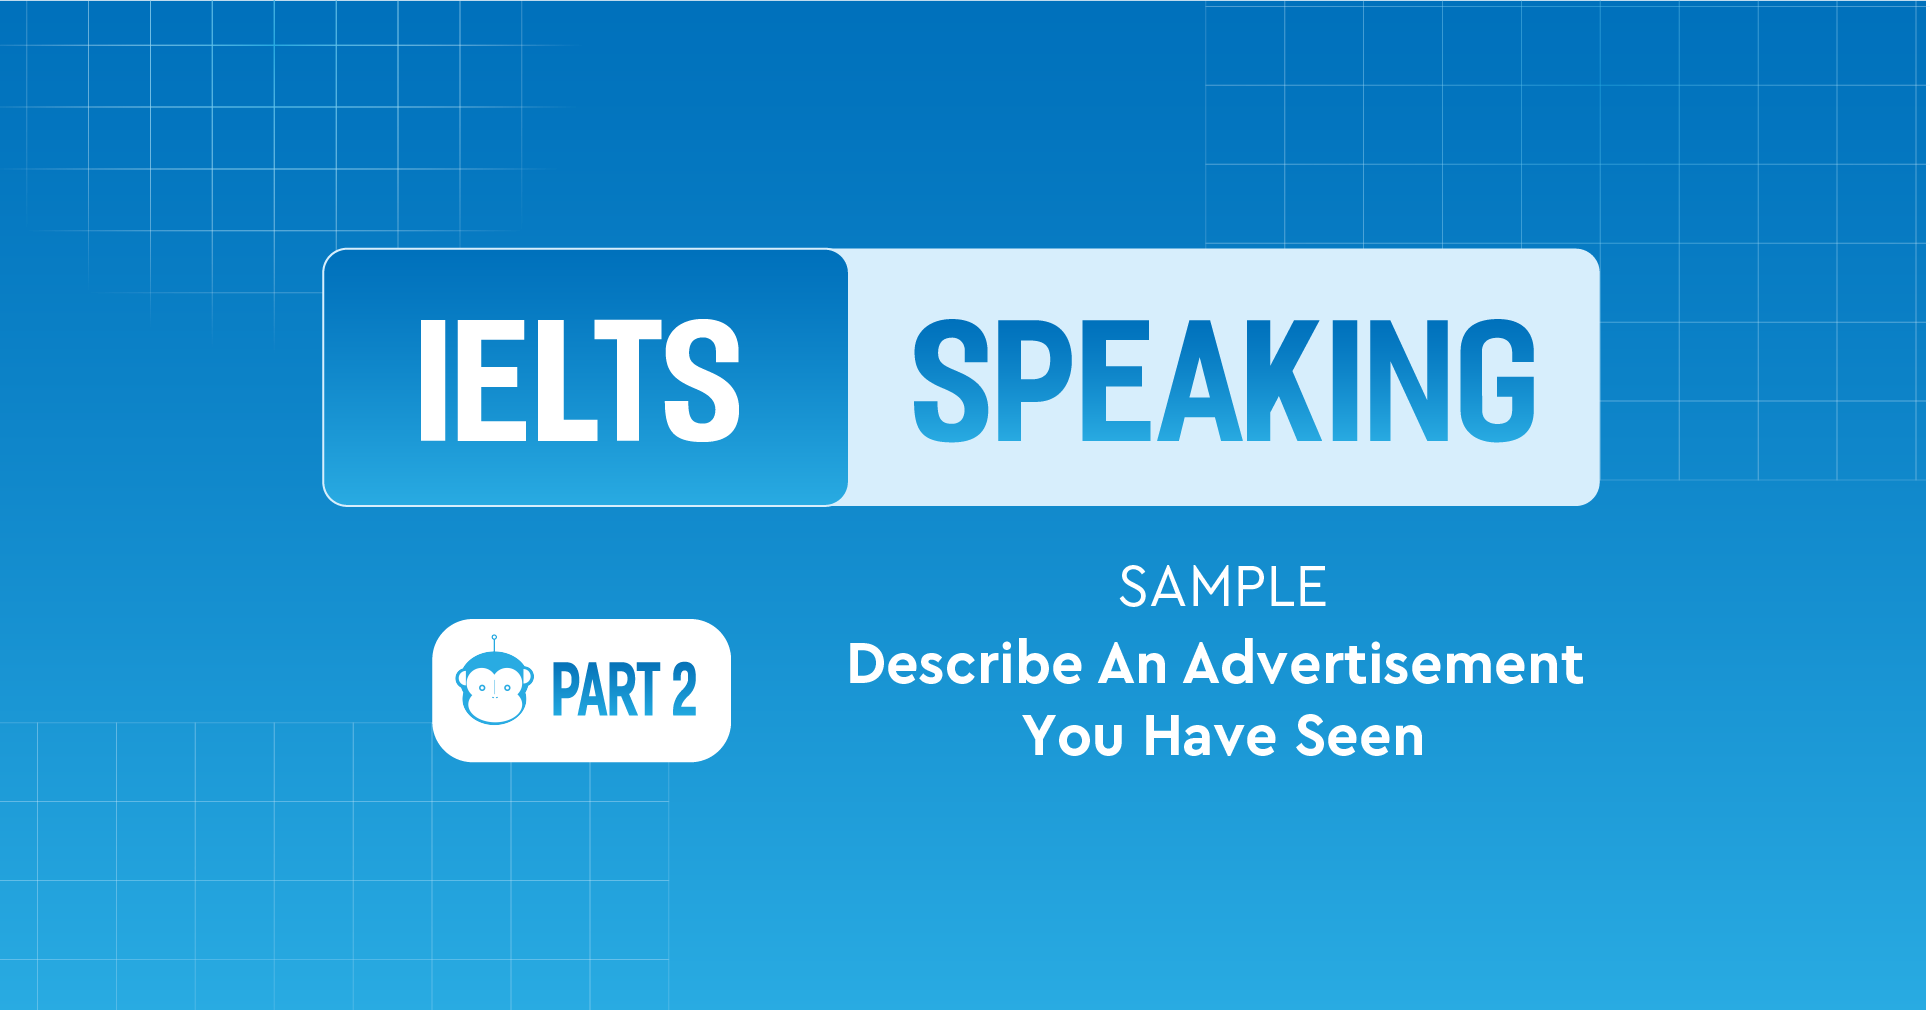 Describe An Advertisement You Have Seen - Sample IELTS Speaking Part 2